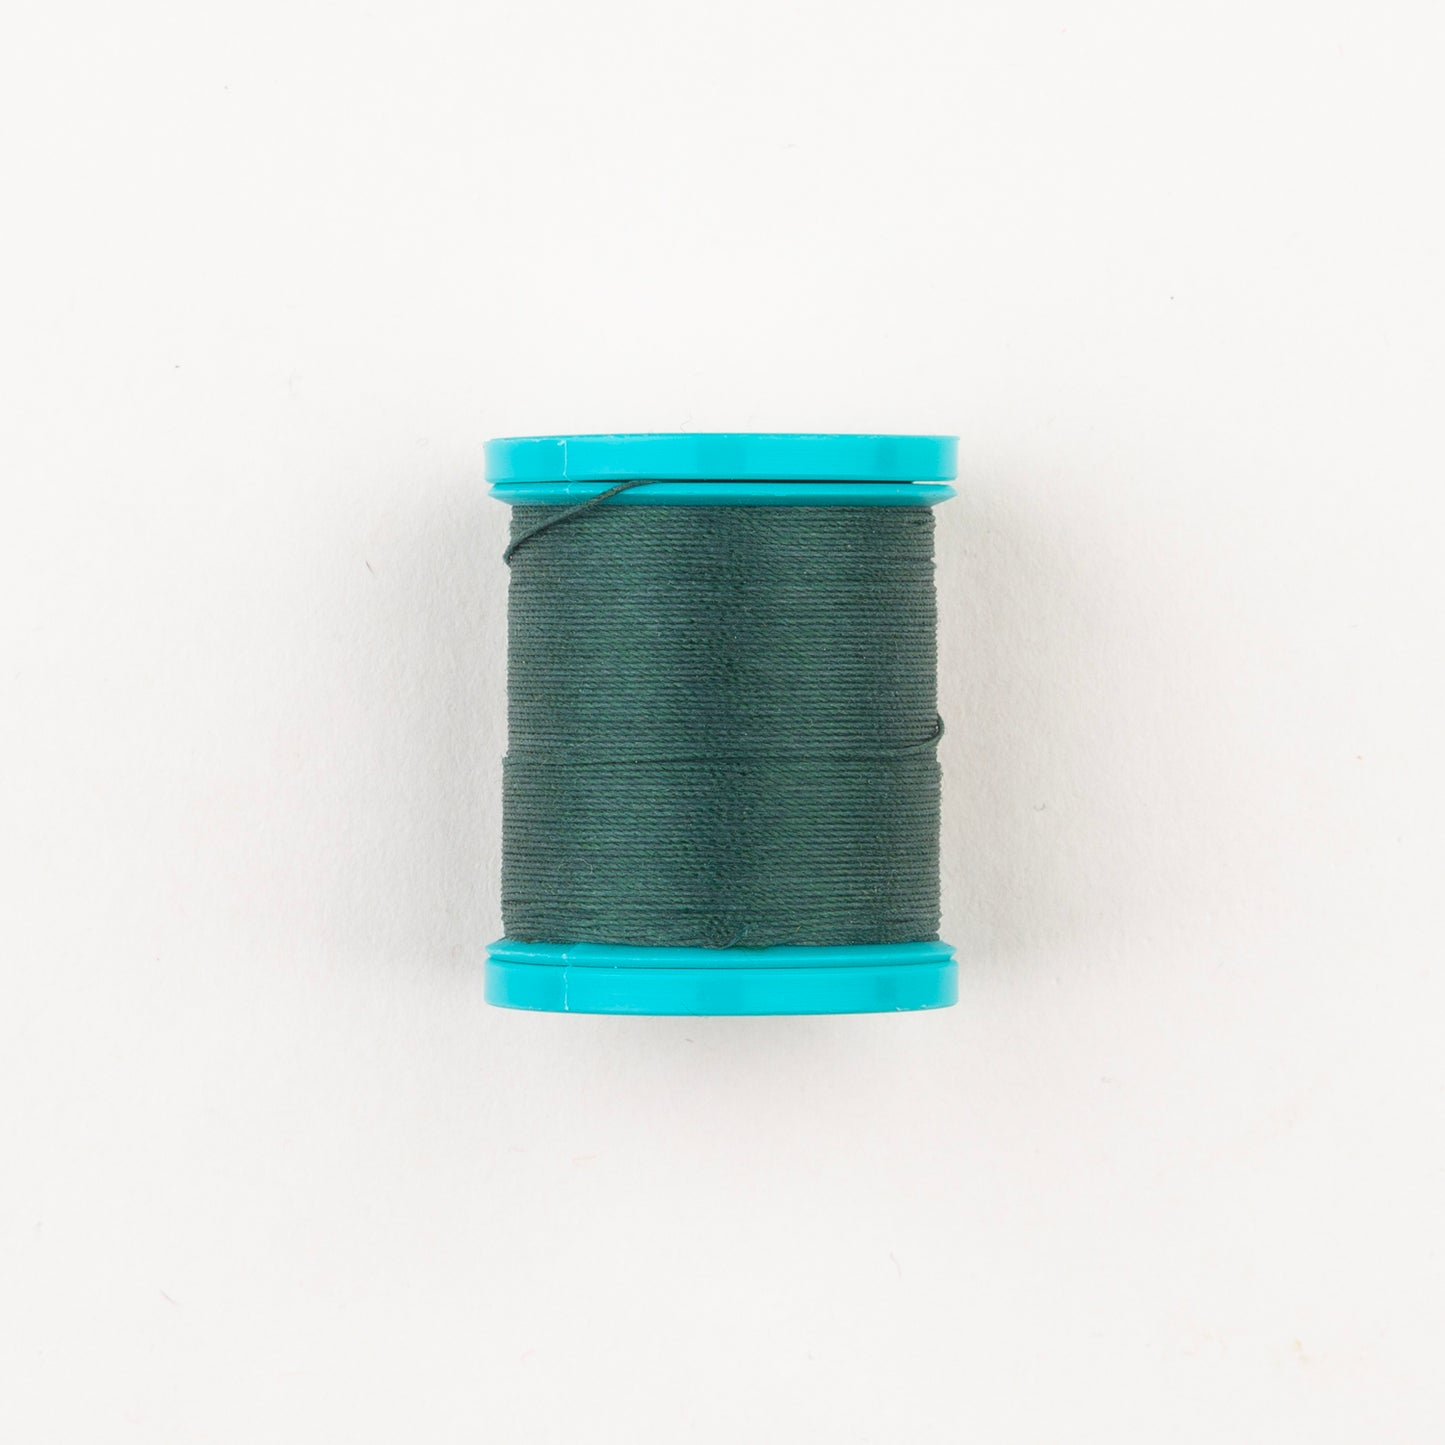 Coats & Clark Button & Craft Thread